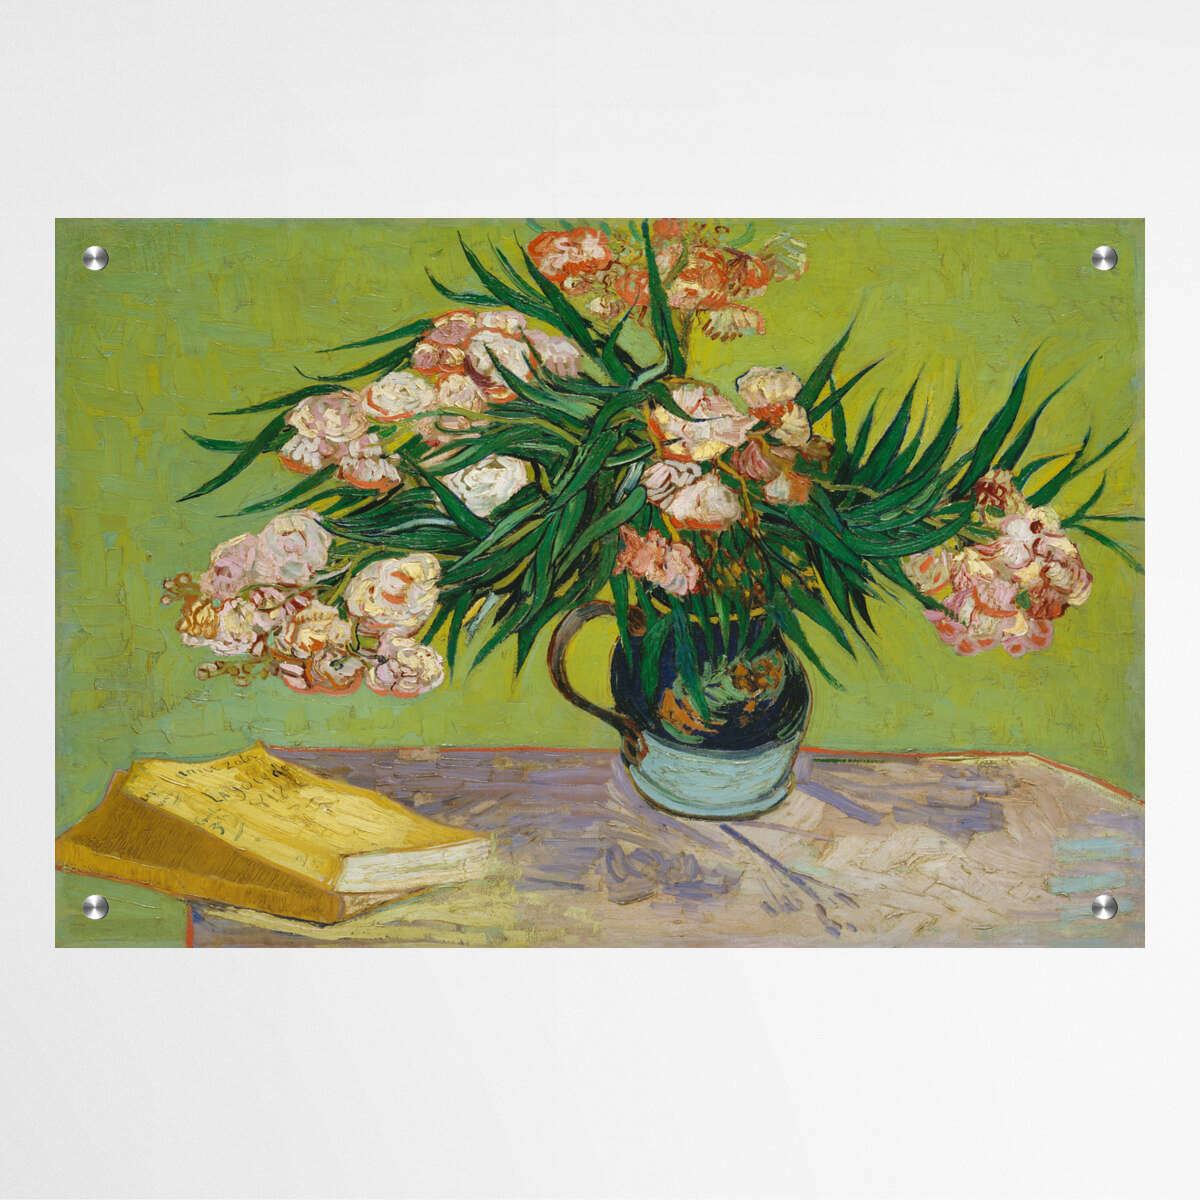 Oleanders by Vincent Van Gogh | Vincent Van Gogh Wall Art Prints - The Canvas Hive